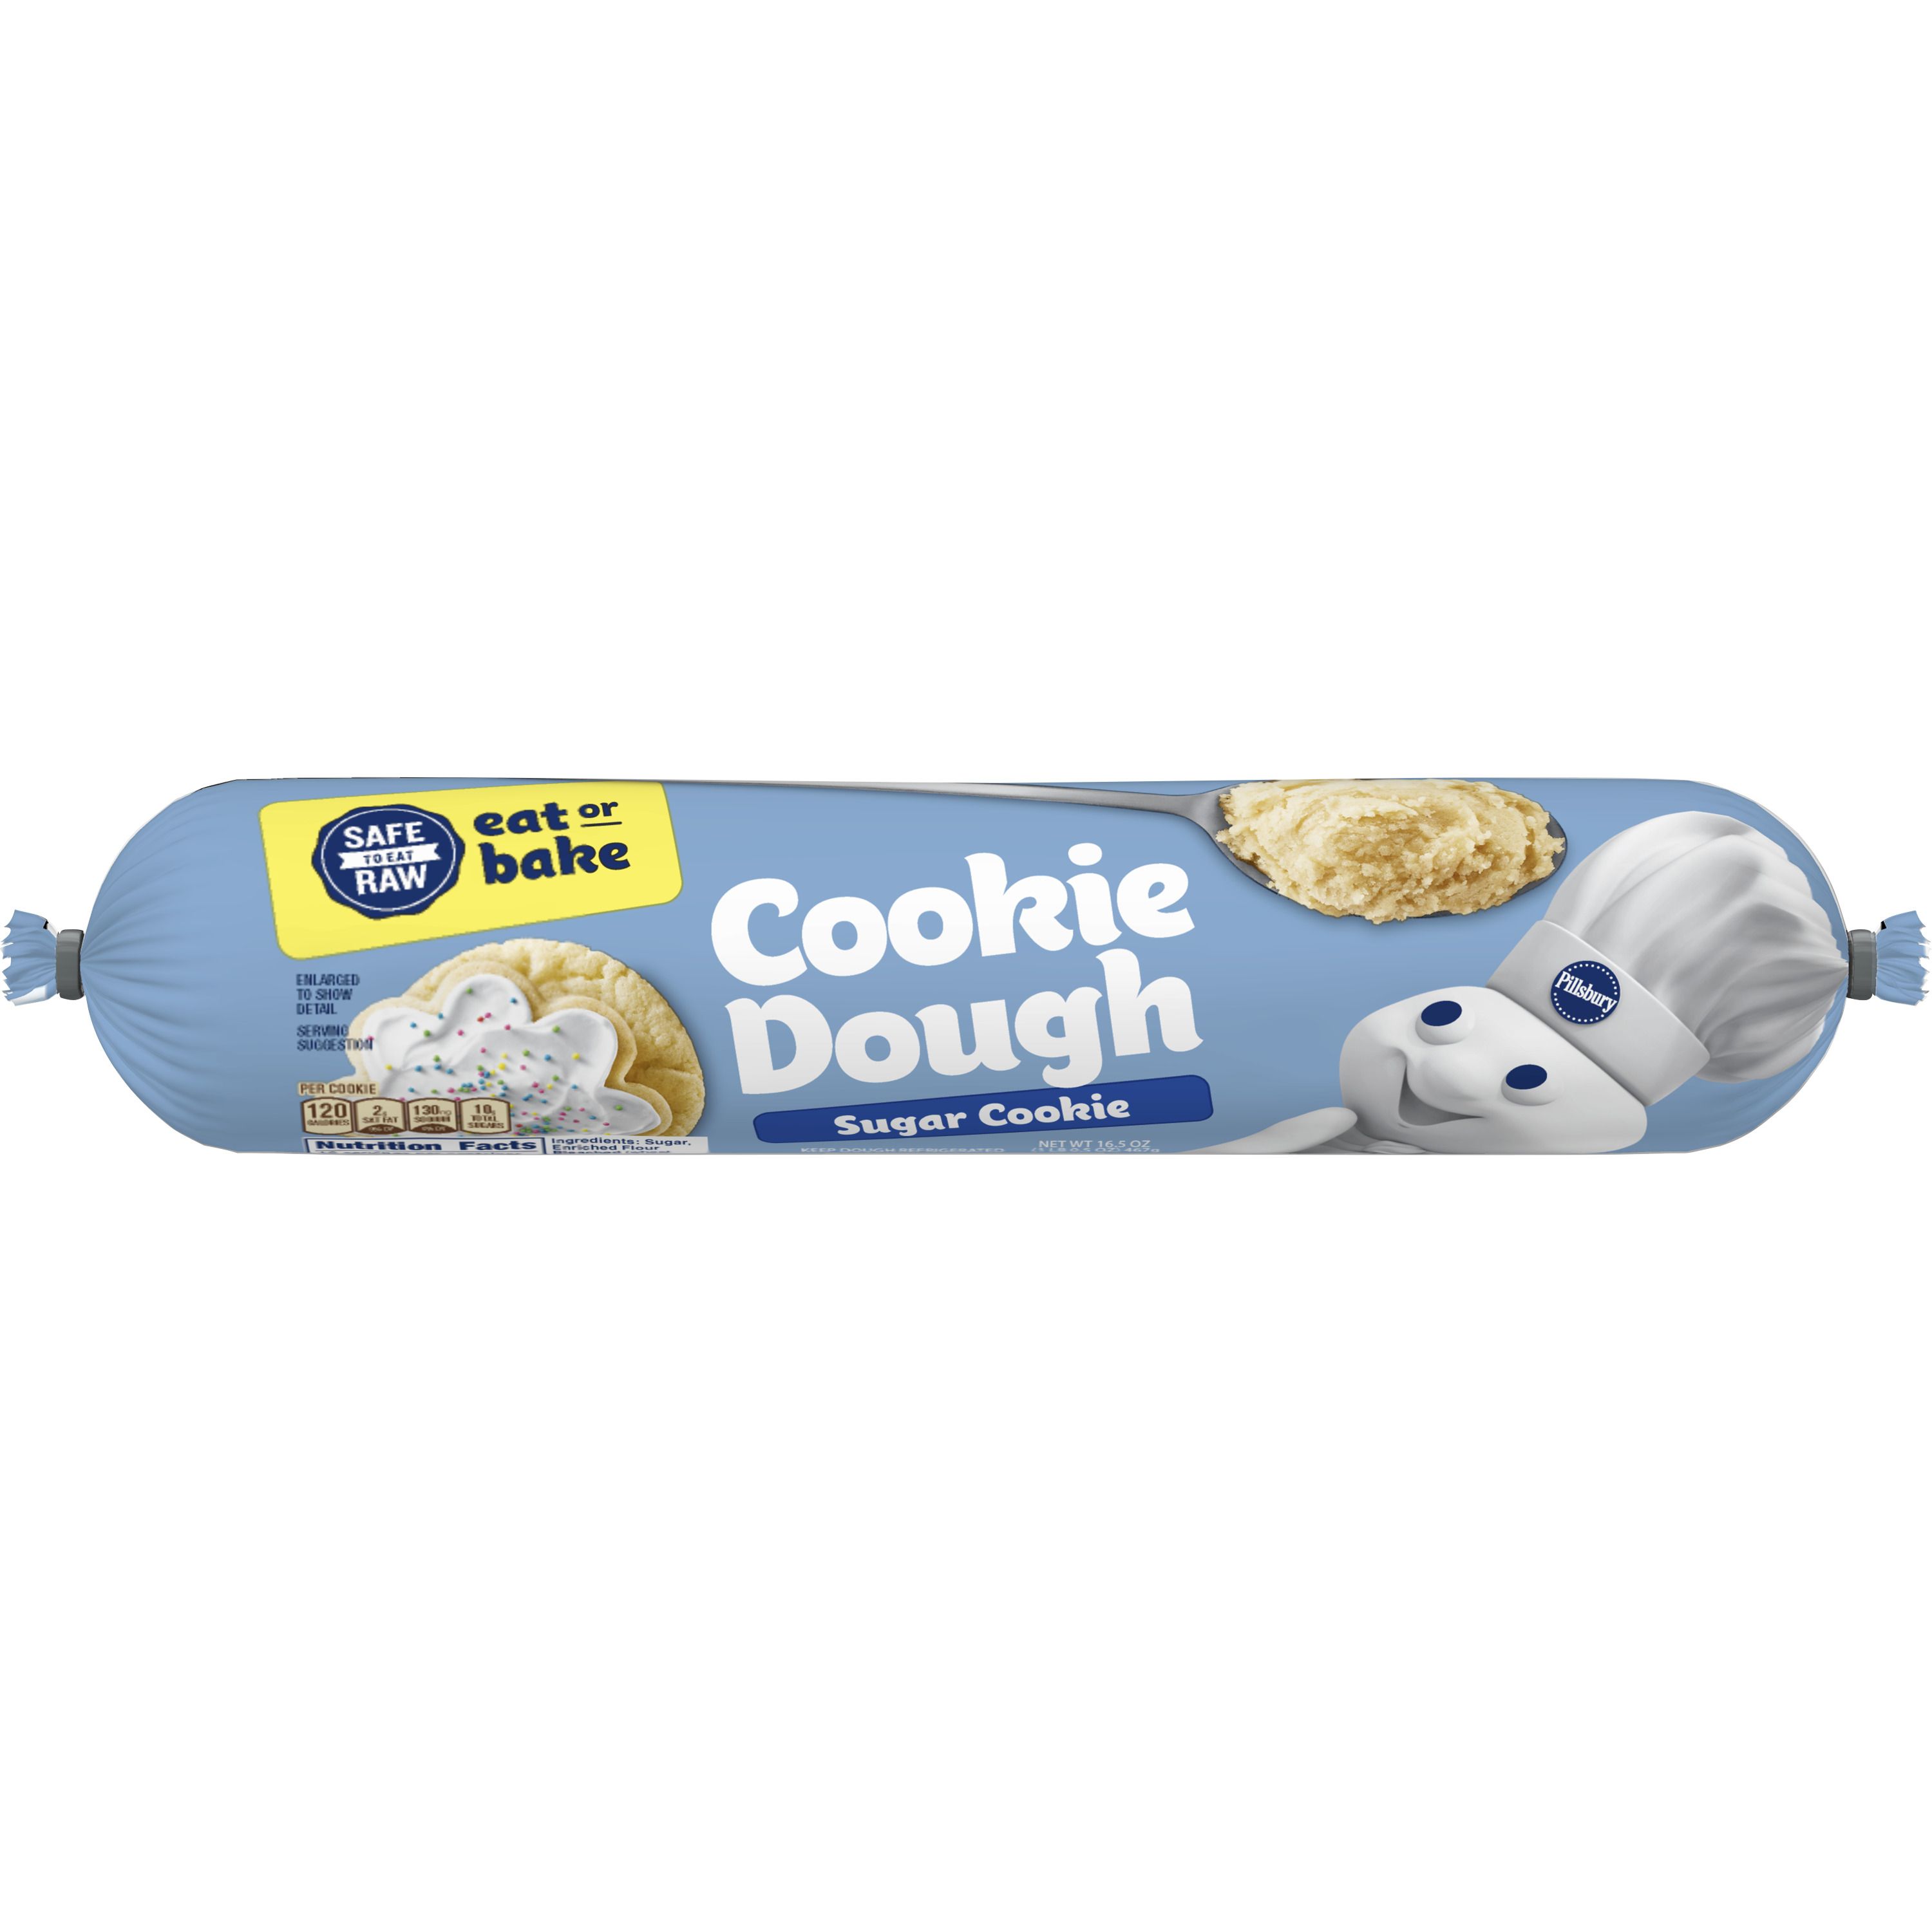 Pillsbury™ Sugar Refrigerated Cookie Dough - Front